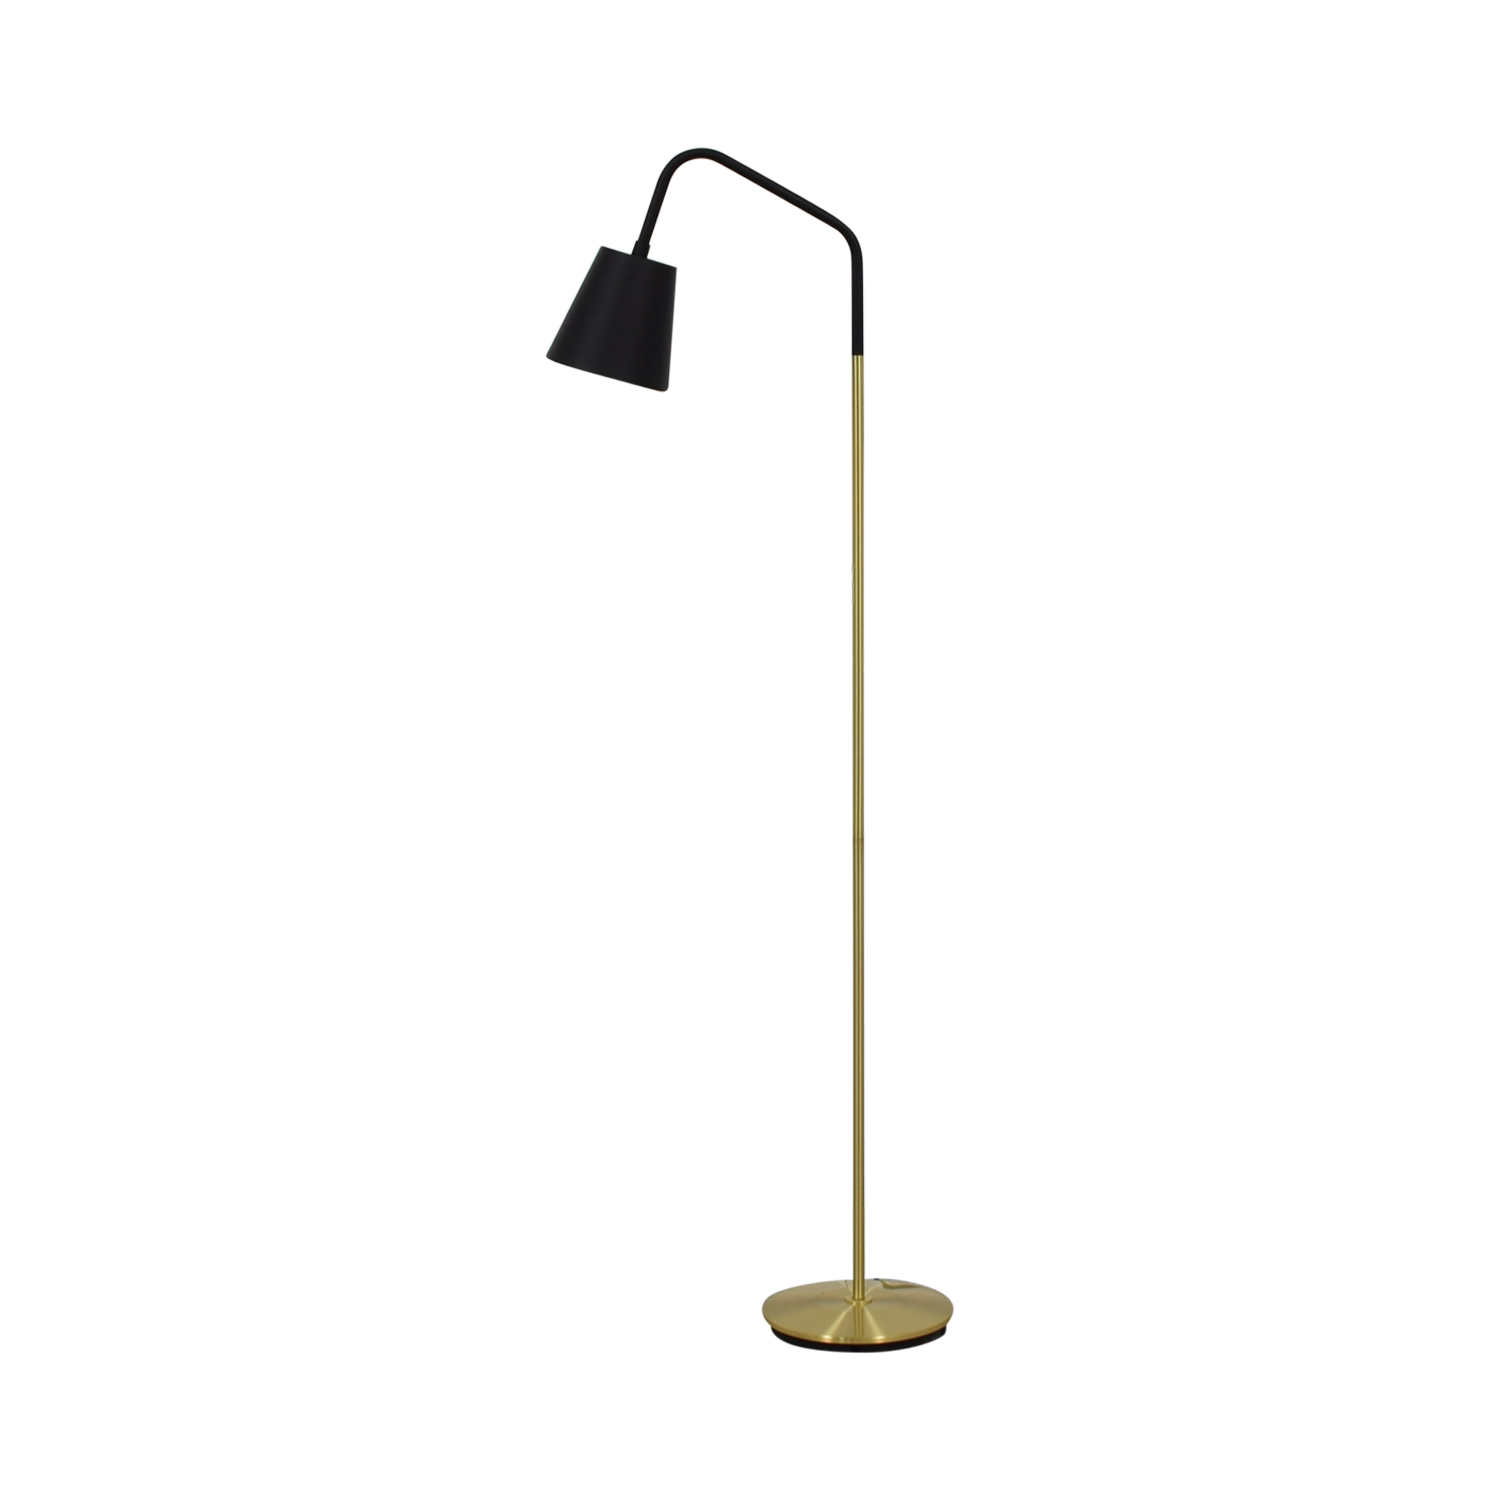 37 Off Cb2 Cb2 Crane Brass Floor Lamp Decor for dimensions 1500 X 1500